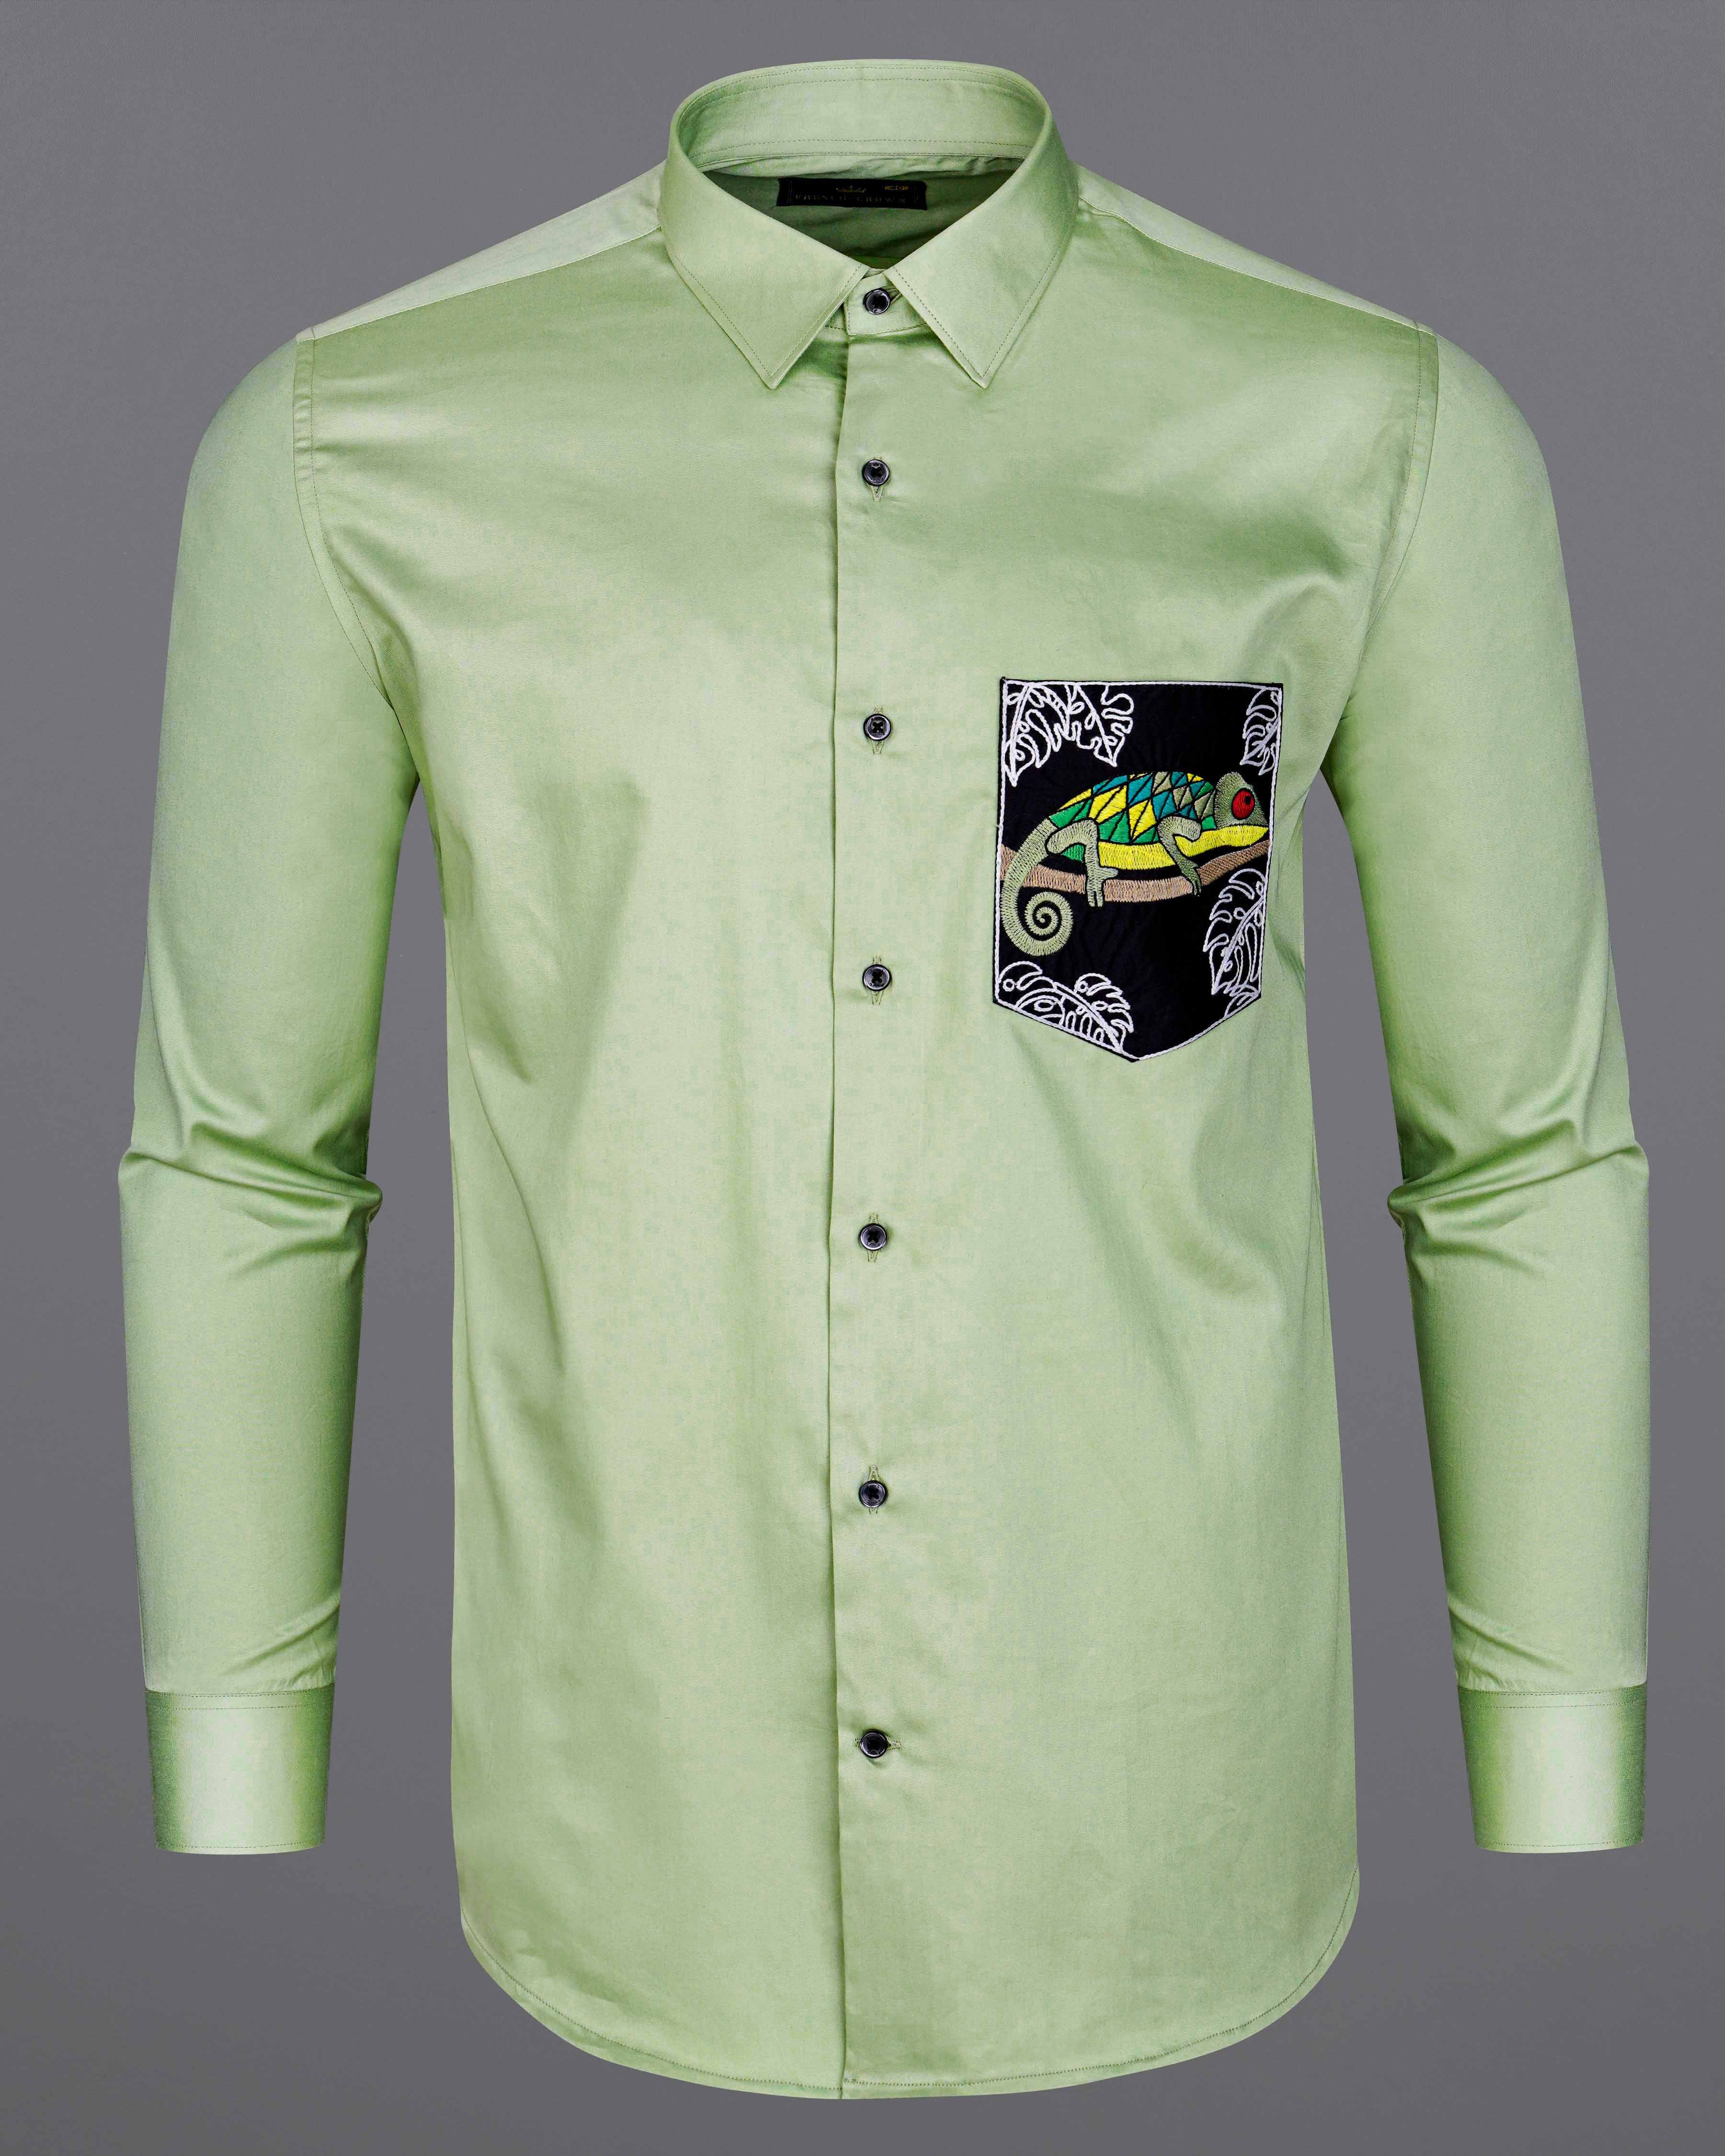 Timberwolf Green with Black Patch Subtle Sheen Pocket Chameleon Embroidered  Super Soft Premium Cotton Shirt 8438-BLK-E005-38, 8438-BLK-E005-H-38, 8438-BLK-E005-39, 8438-BLK-E005-H-39, 8438-BLK-E005-40, 8438-BLK-E005-H-40, 8438-BLK-E005-42, 8438-BLK-E005-H-42, 8438-BLK-E005-44, 8438-BLK-E005-H-44, 8438-BLK-E005-46, 8438-BLK-E005-H-46, 8438-BLK-E005-48, 8438-BLK-E005-H-48, 8438-BLK-E005-50, 8438-BLK-E005-H-50, 8438-BLK-E005-52, 8438-BLK-E005-H-52